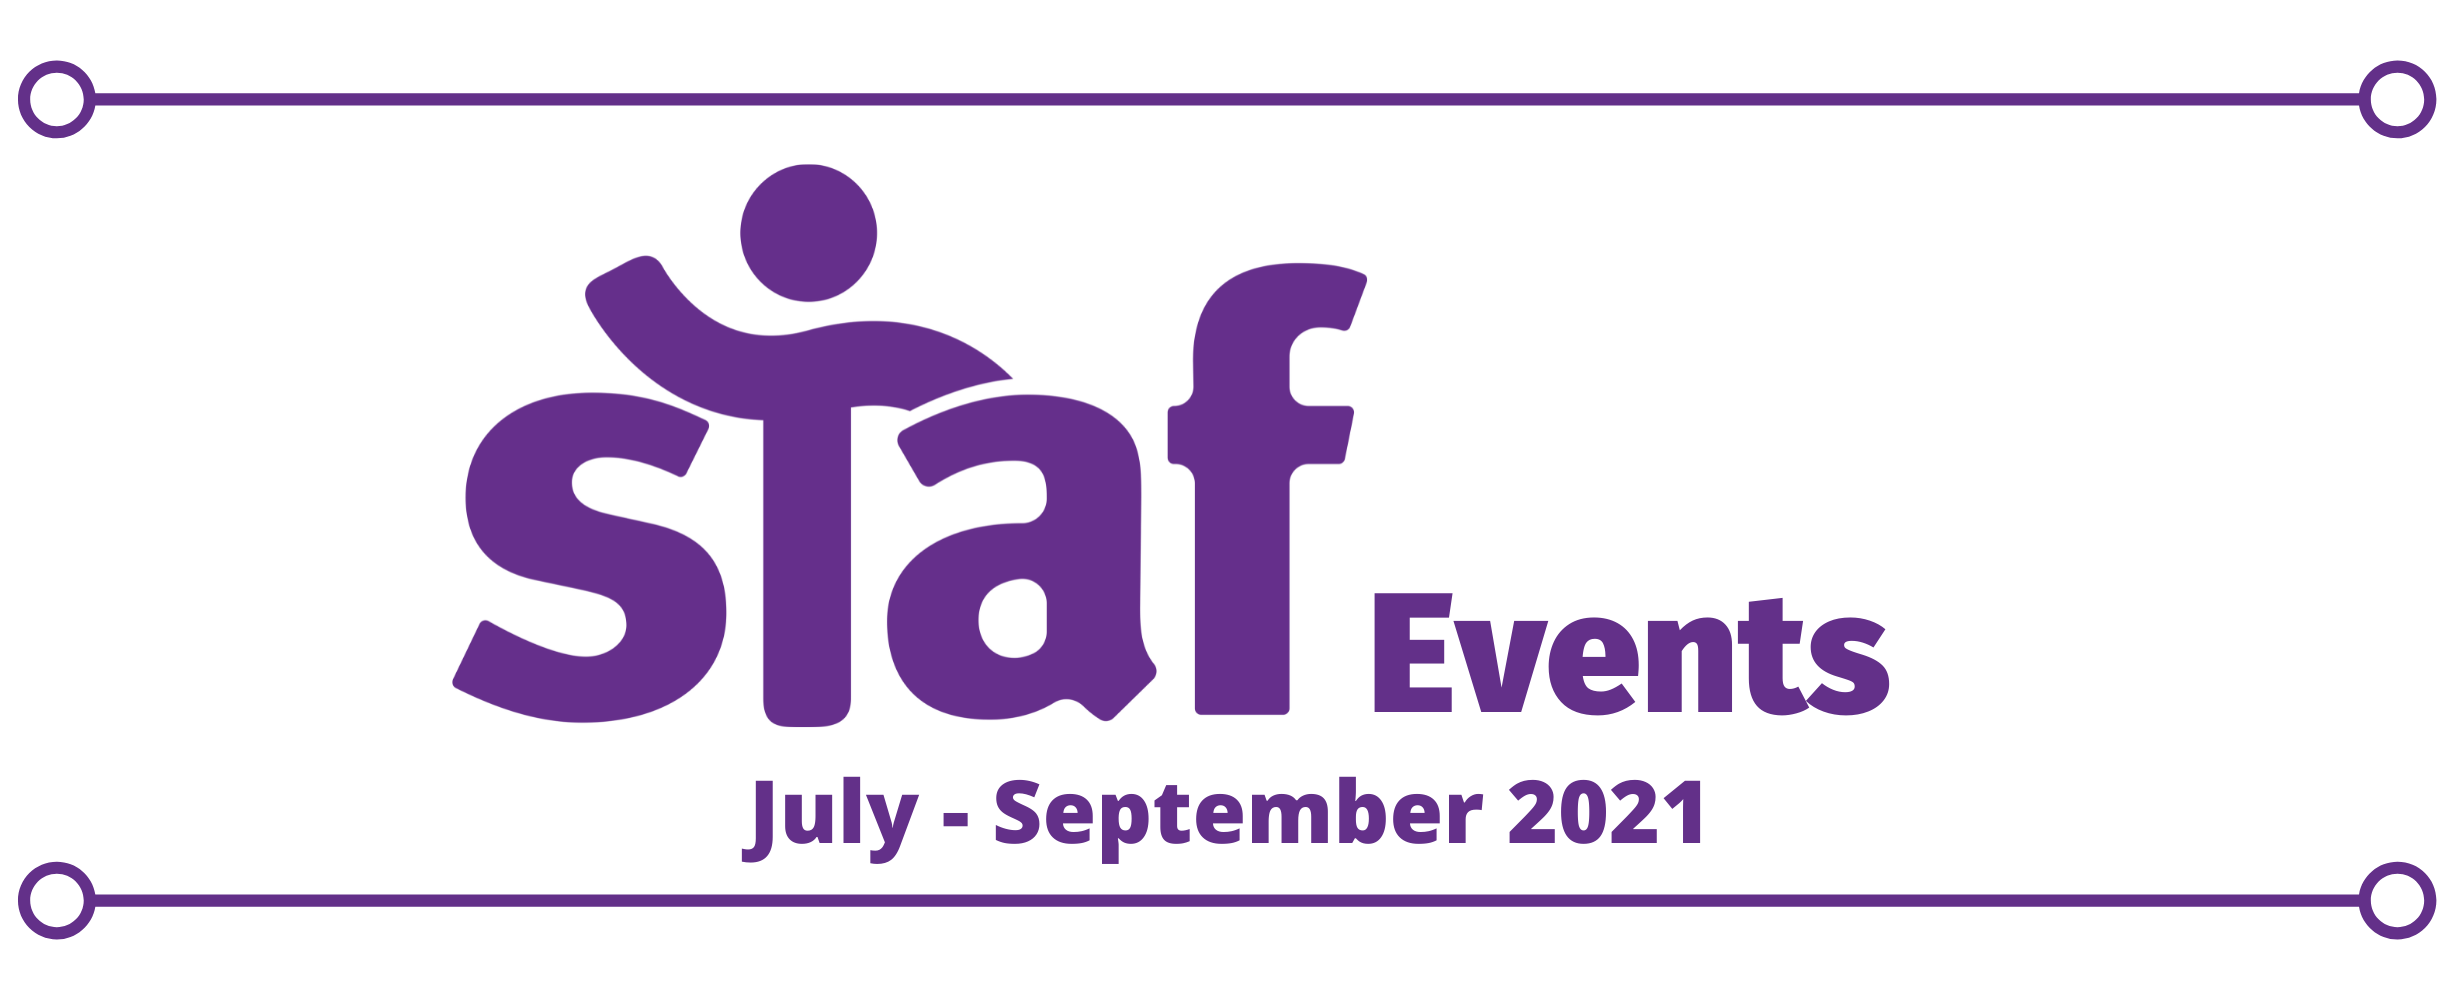 Staf Events Jul - Sep 2021